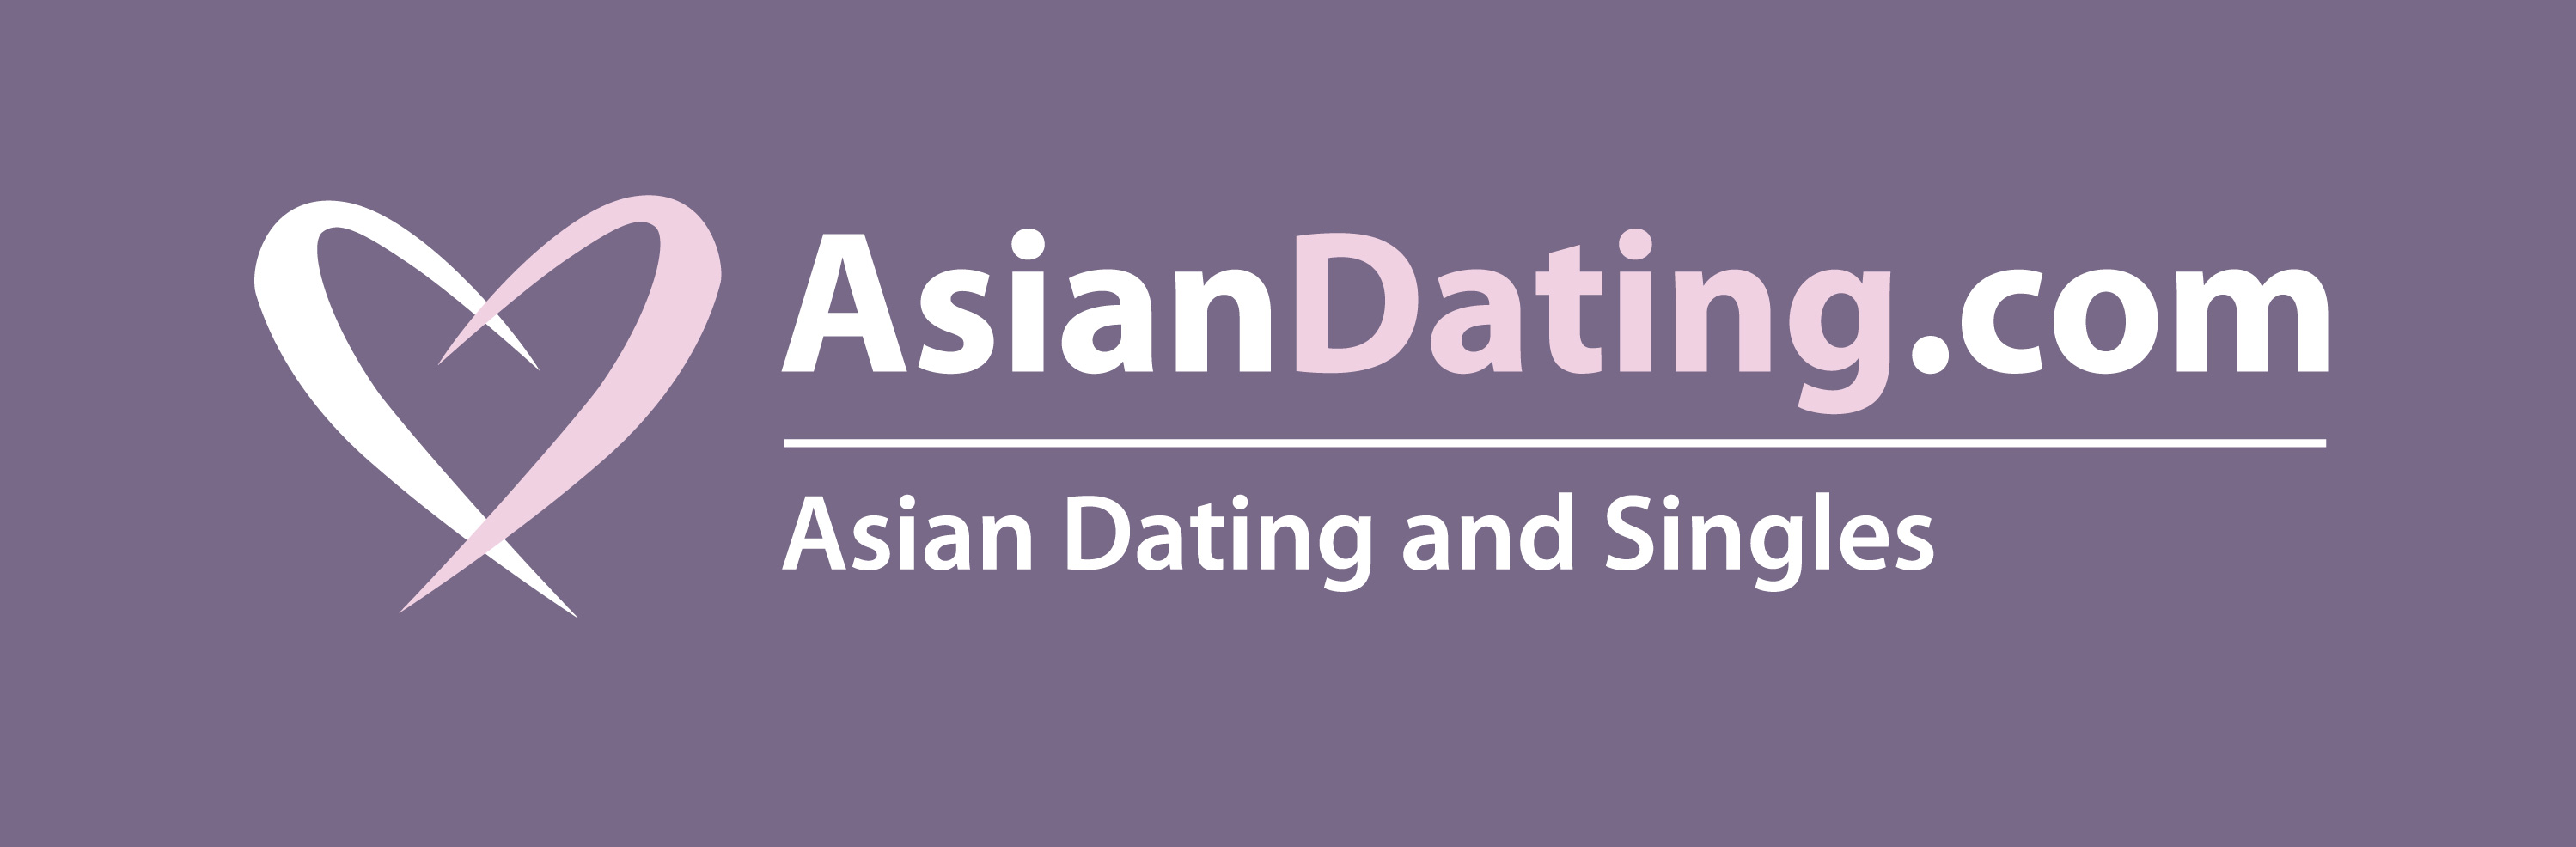 Asian dating login and password